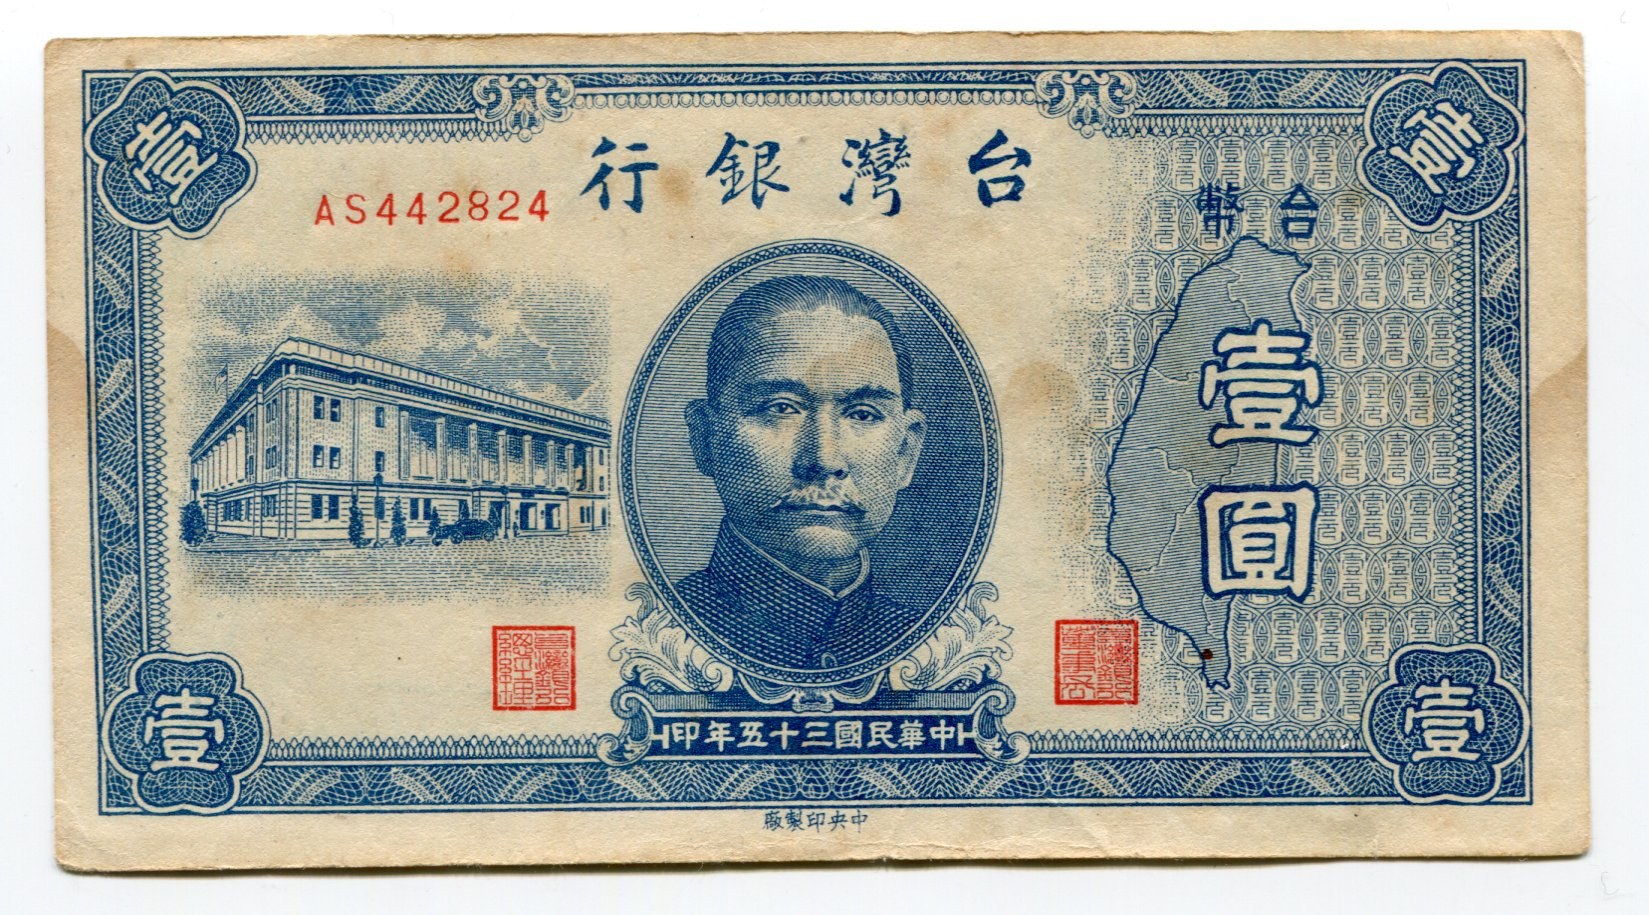 Тайвань деньги. Купюры Тайваня. Тайваньский доллар. Новый тайваньский доллар. Тайваньский доллар банкноты.